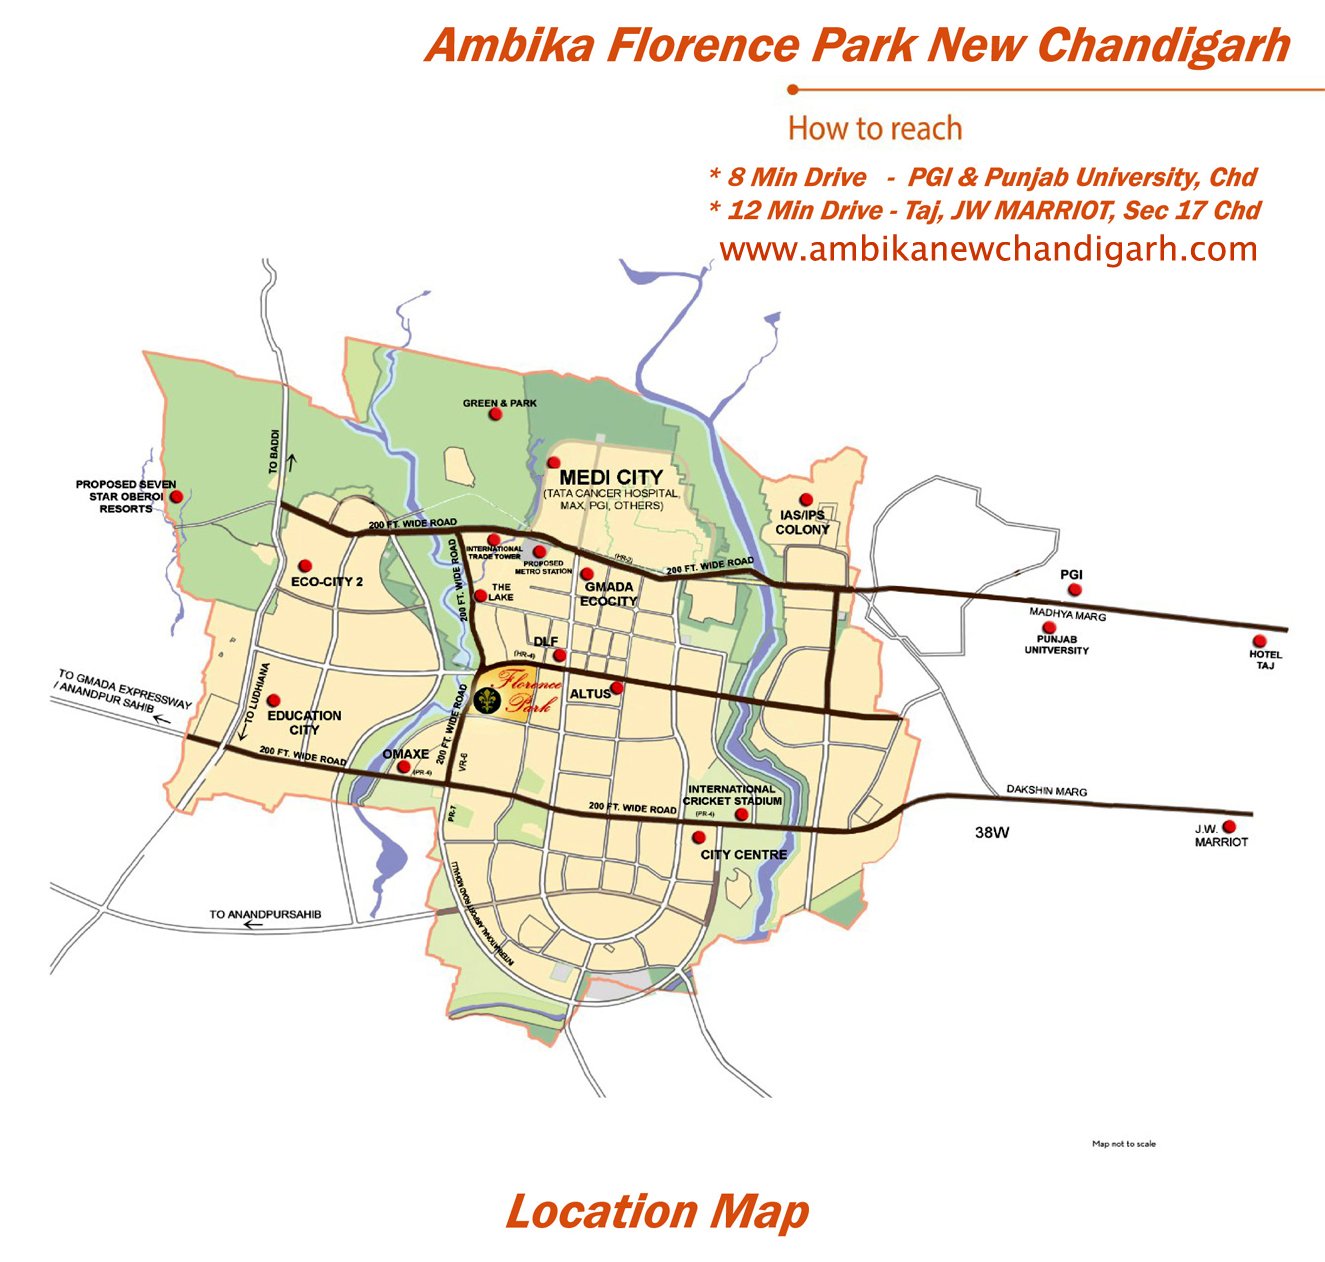 Ambika Florence Park